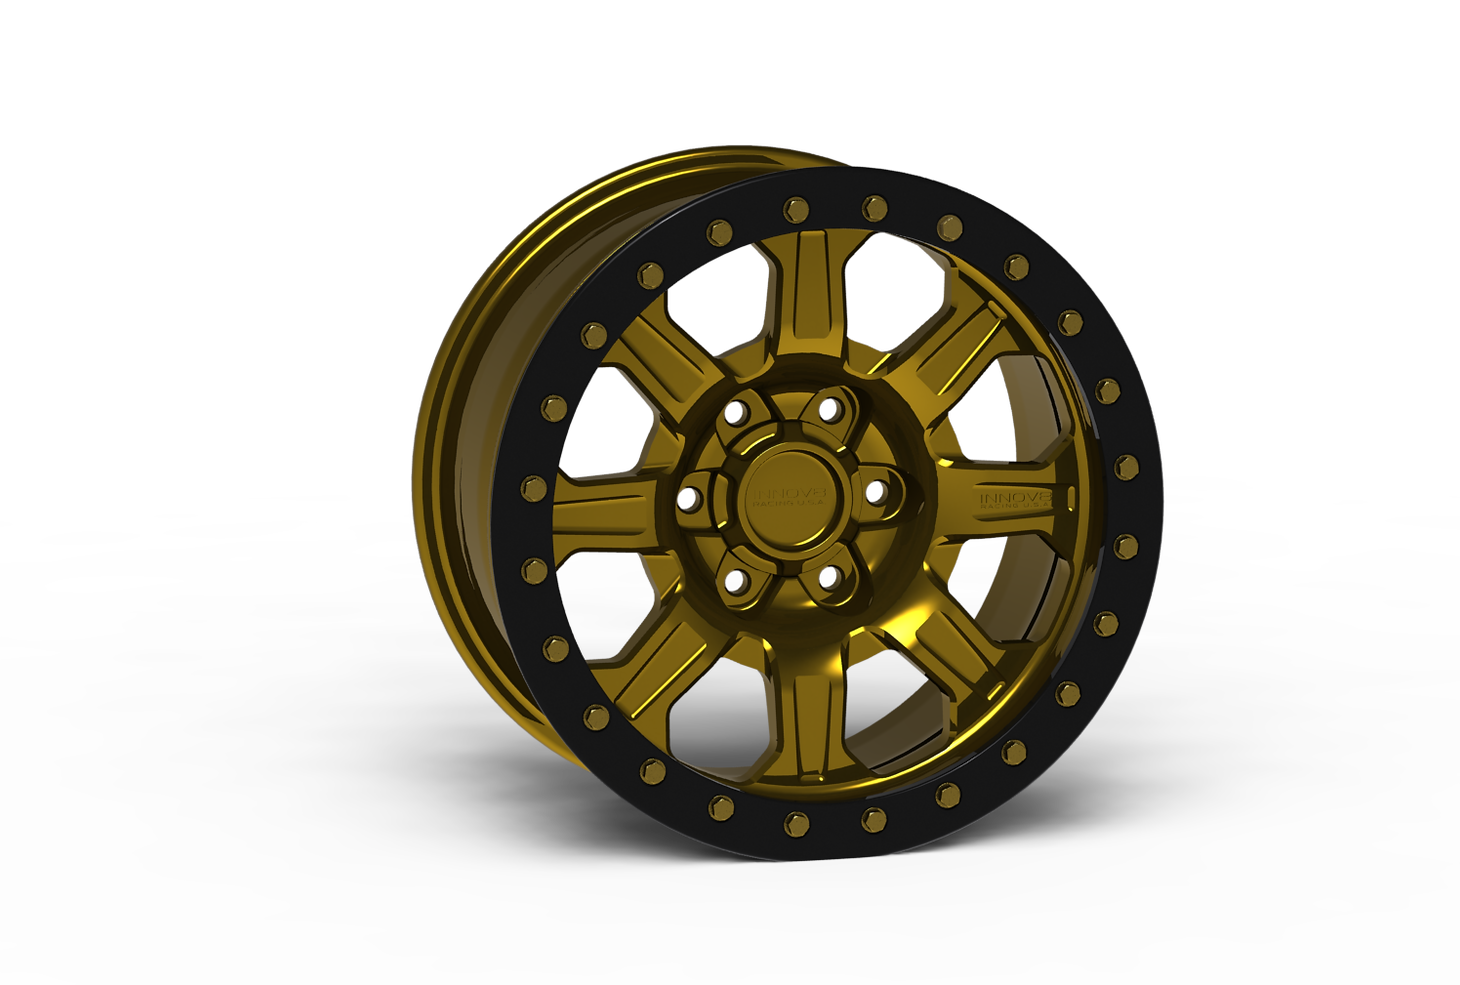 G500 Simulated Beadlock Wheel 18x9.0" 5 & 6 Lug - Standard Ring